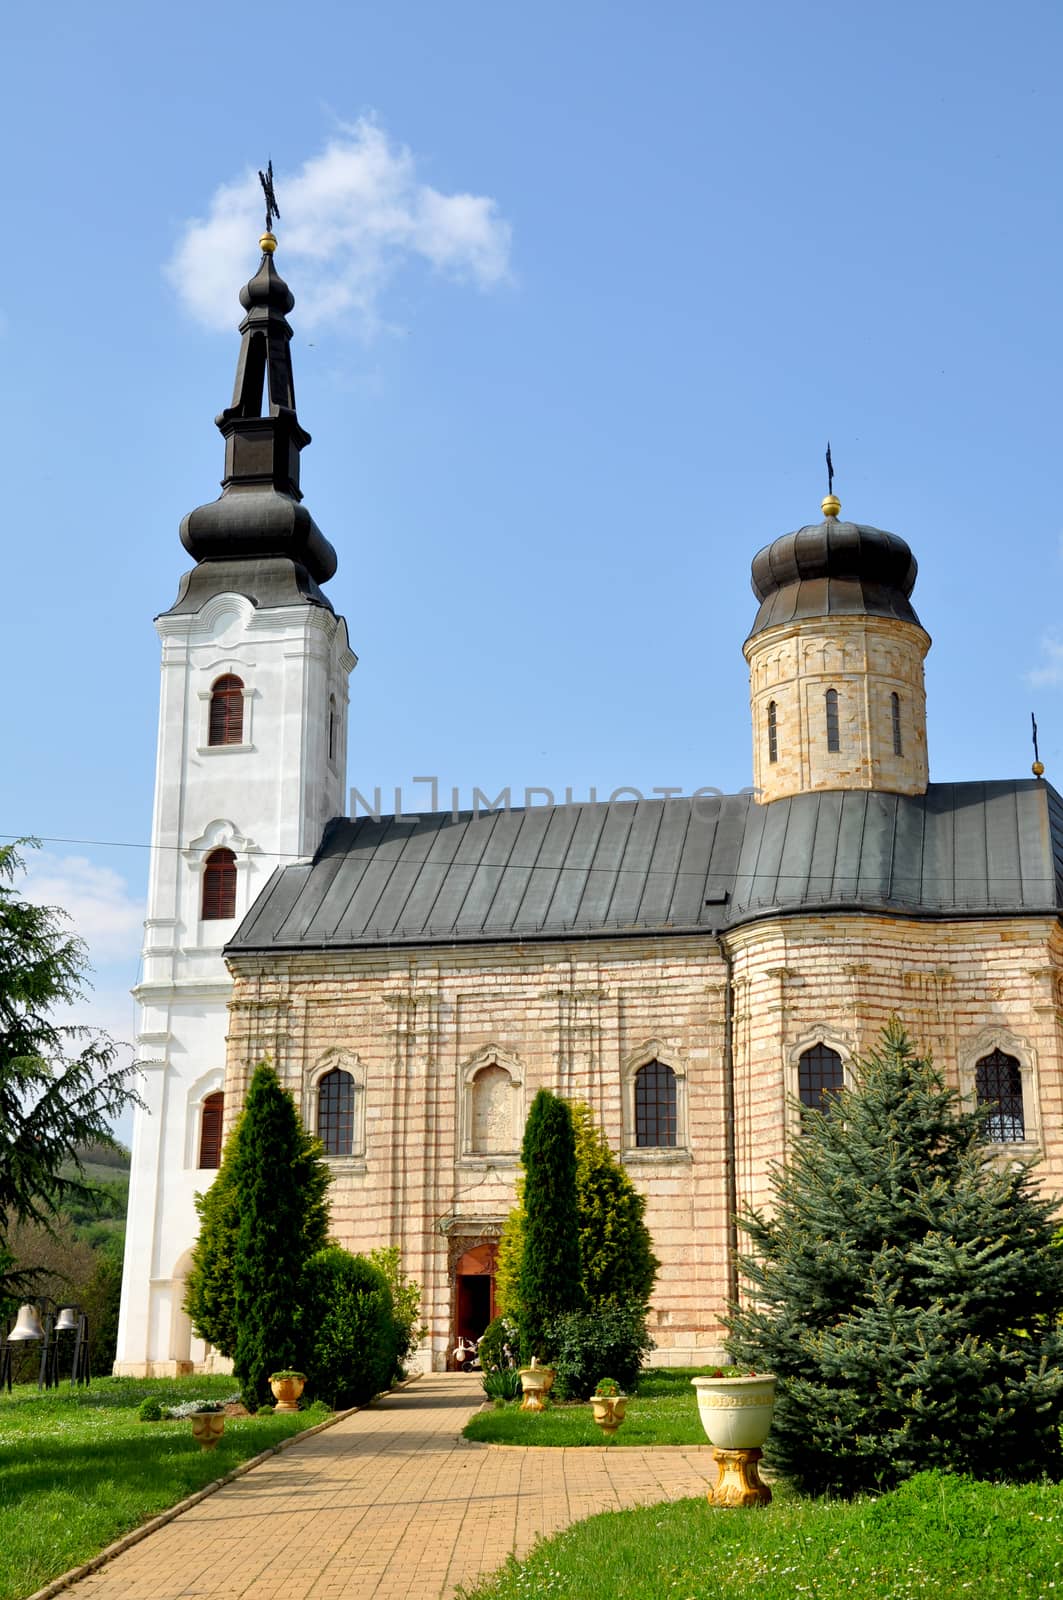 Old monastery by Nikola30